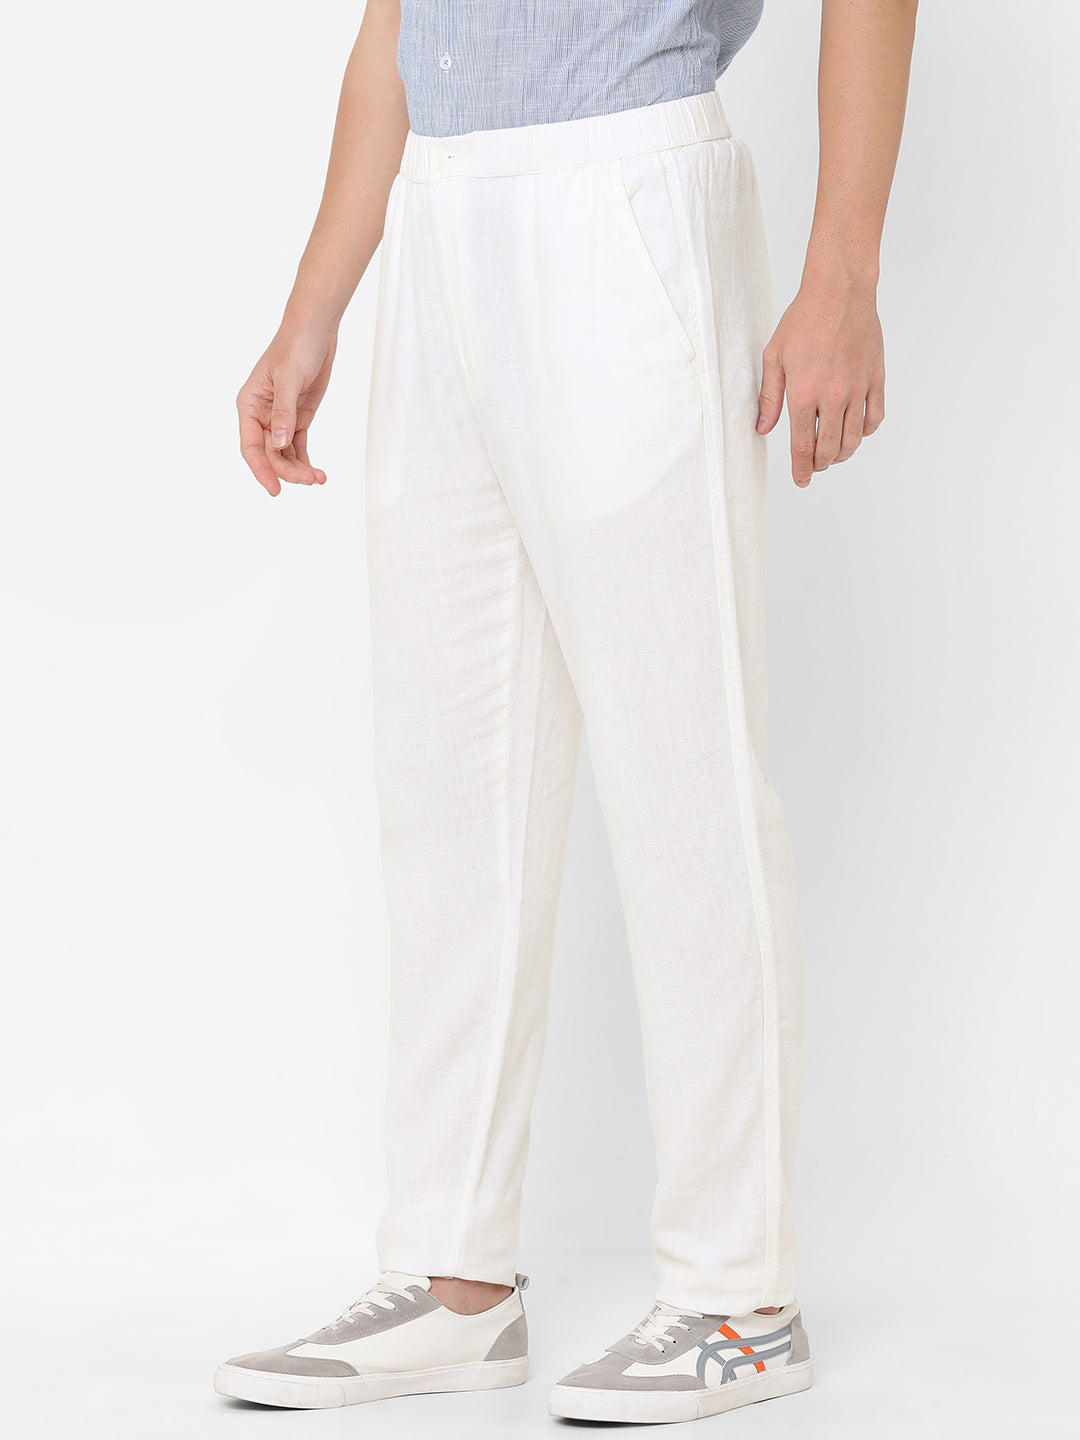 Buy Cyan White Striped Pant Cotton Khadi for Best Price, Reviews, Free  Shipping